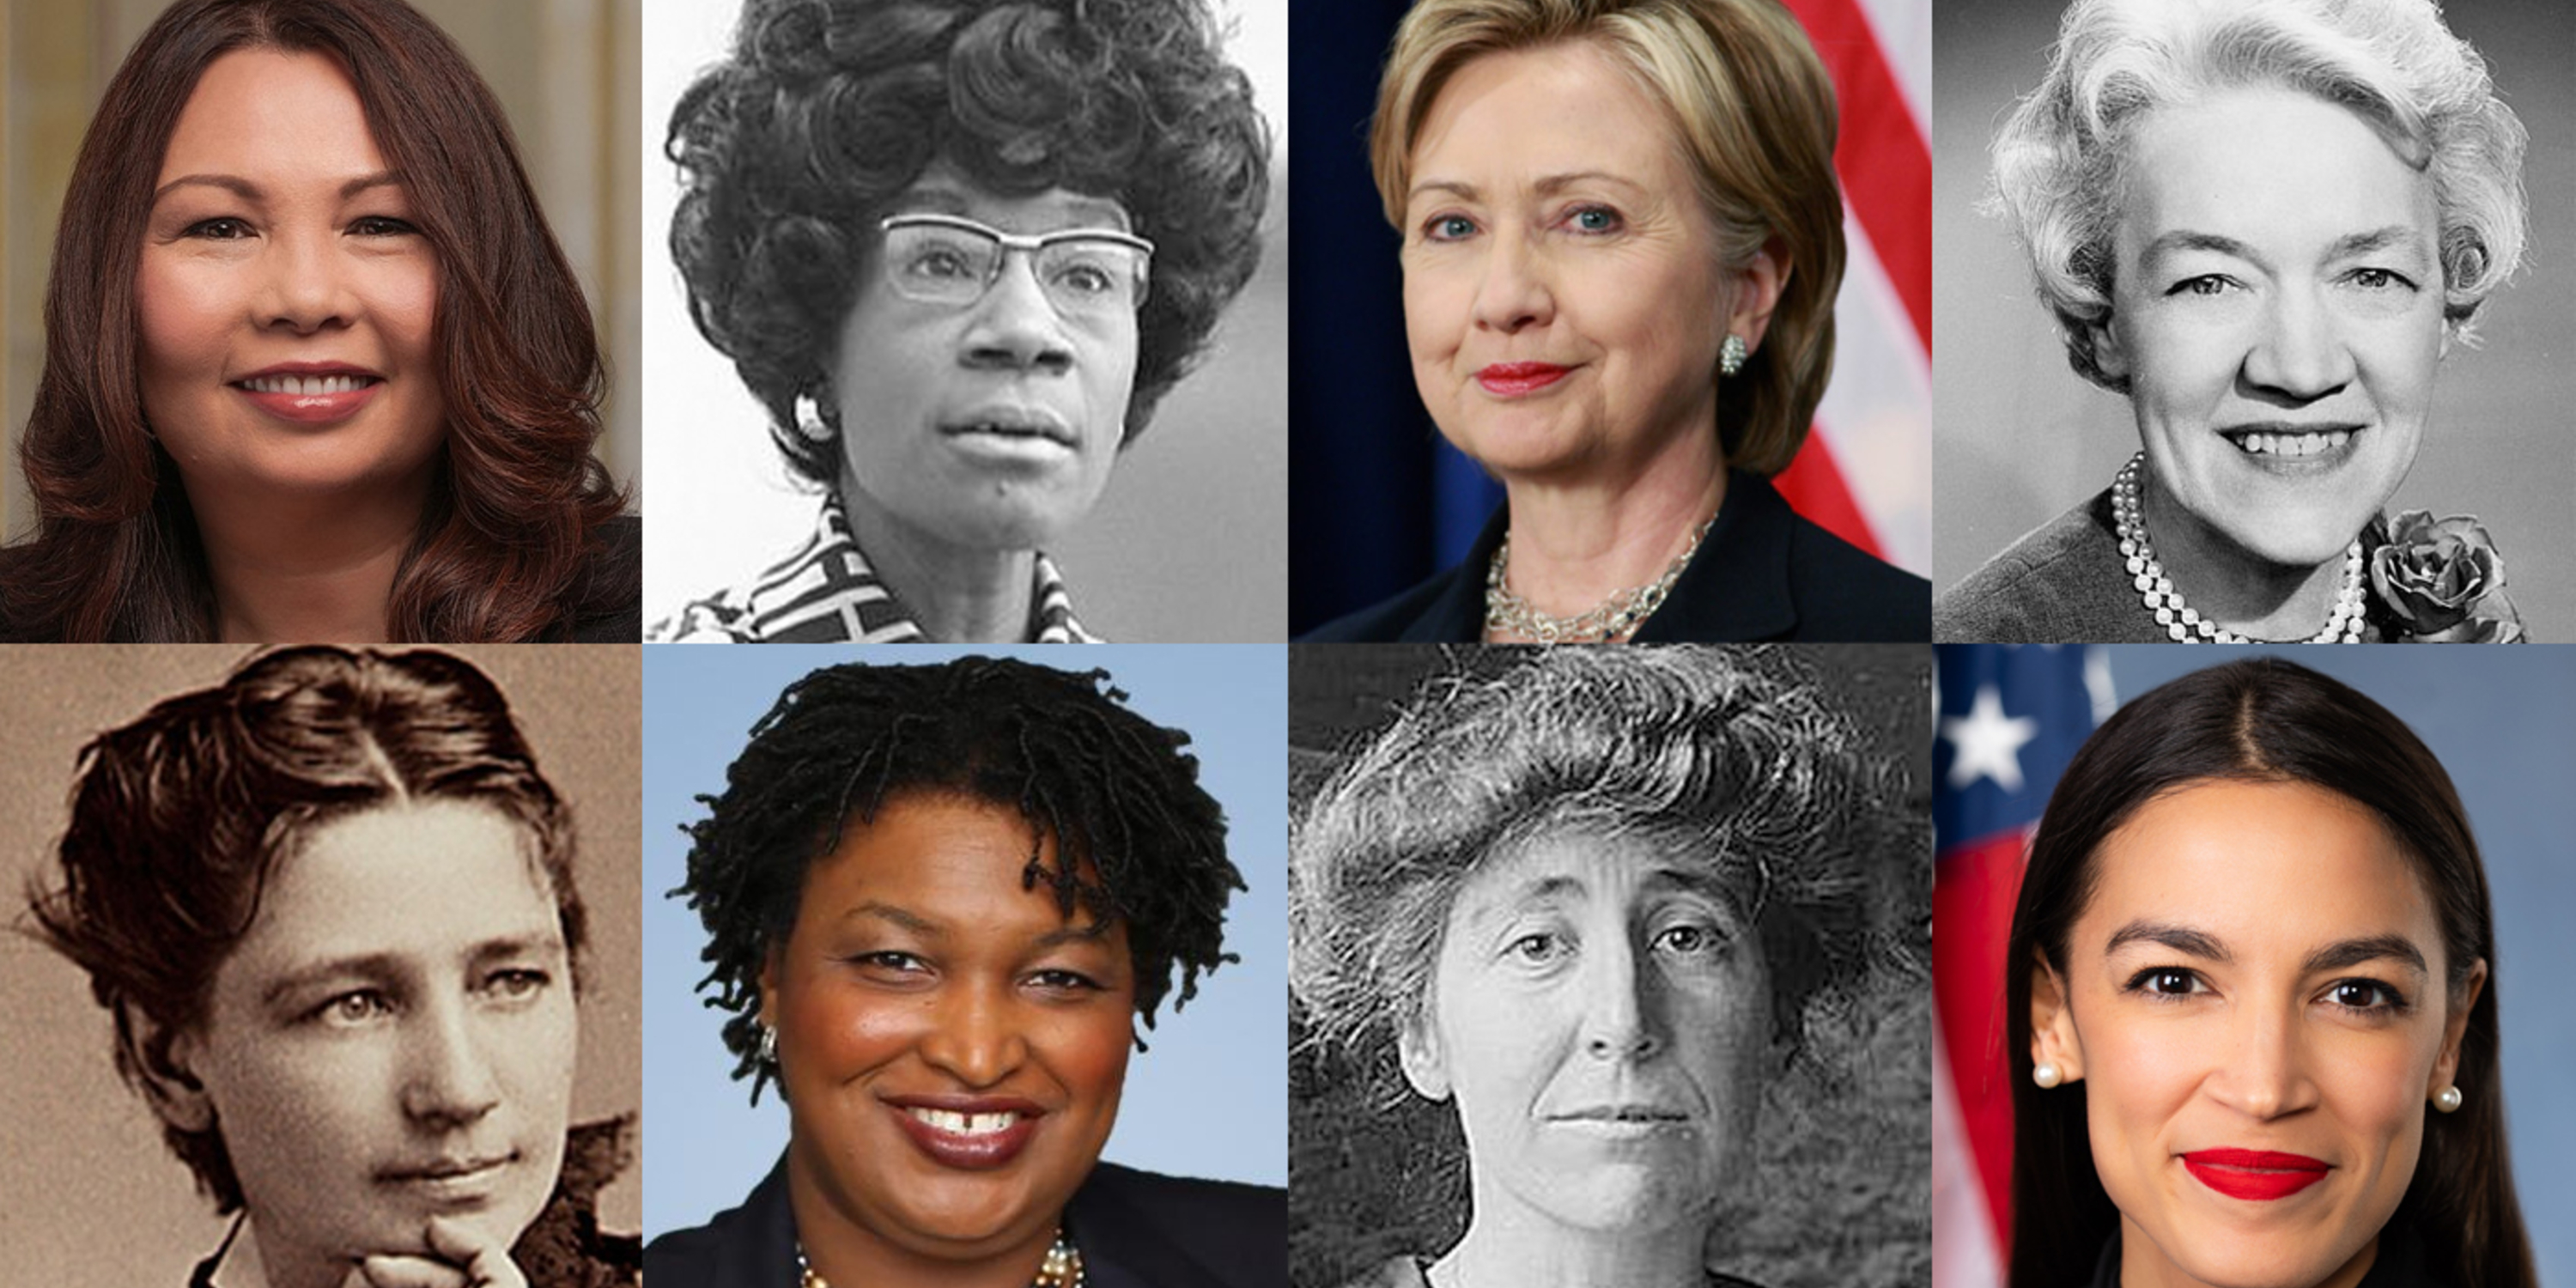 Image of 8 women in US politics 